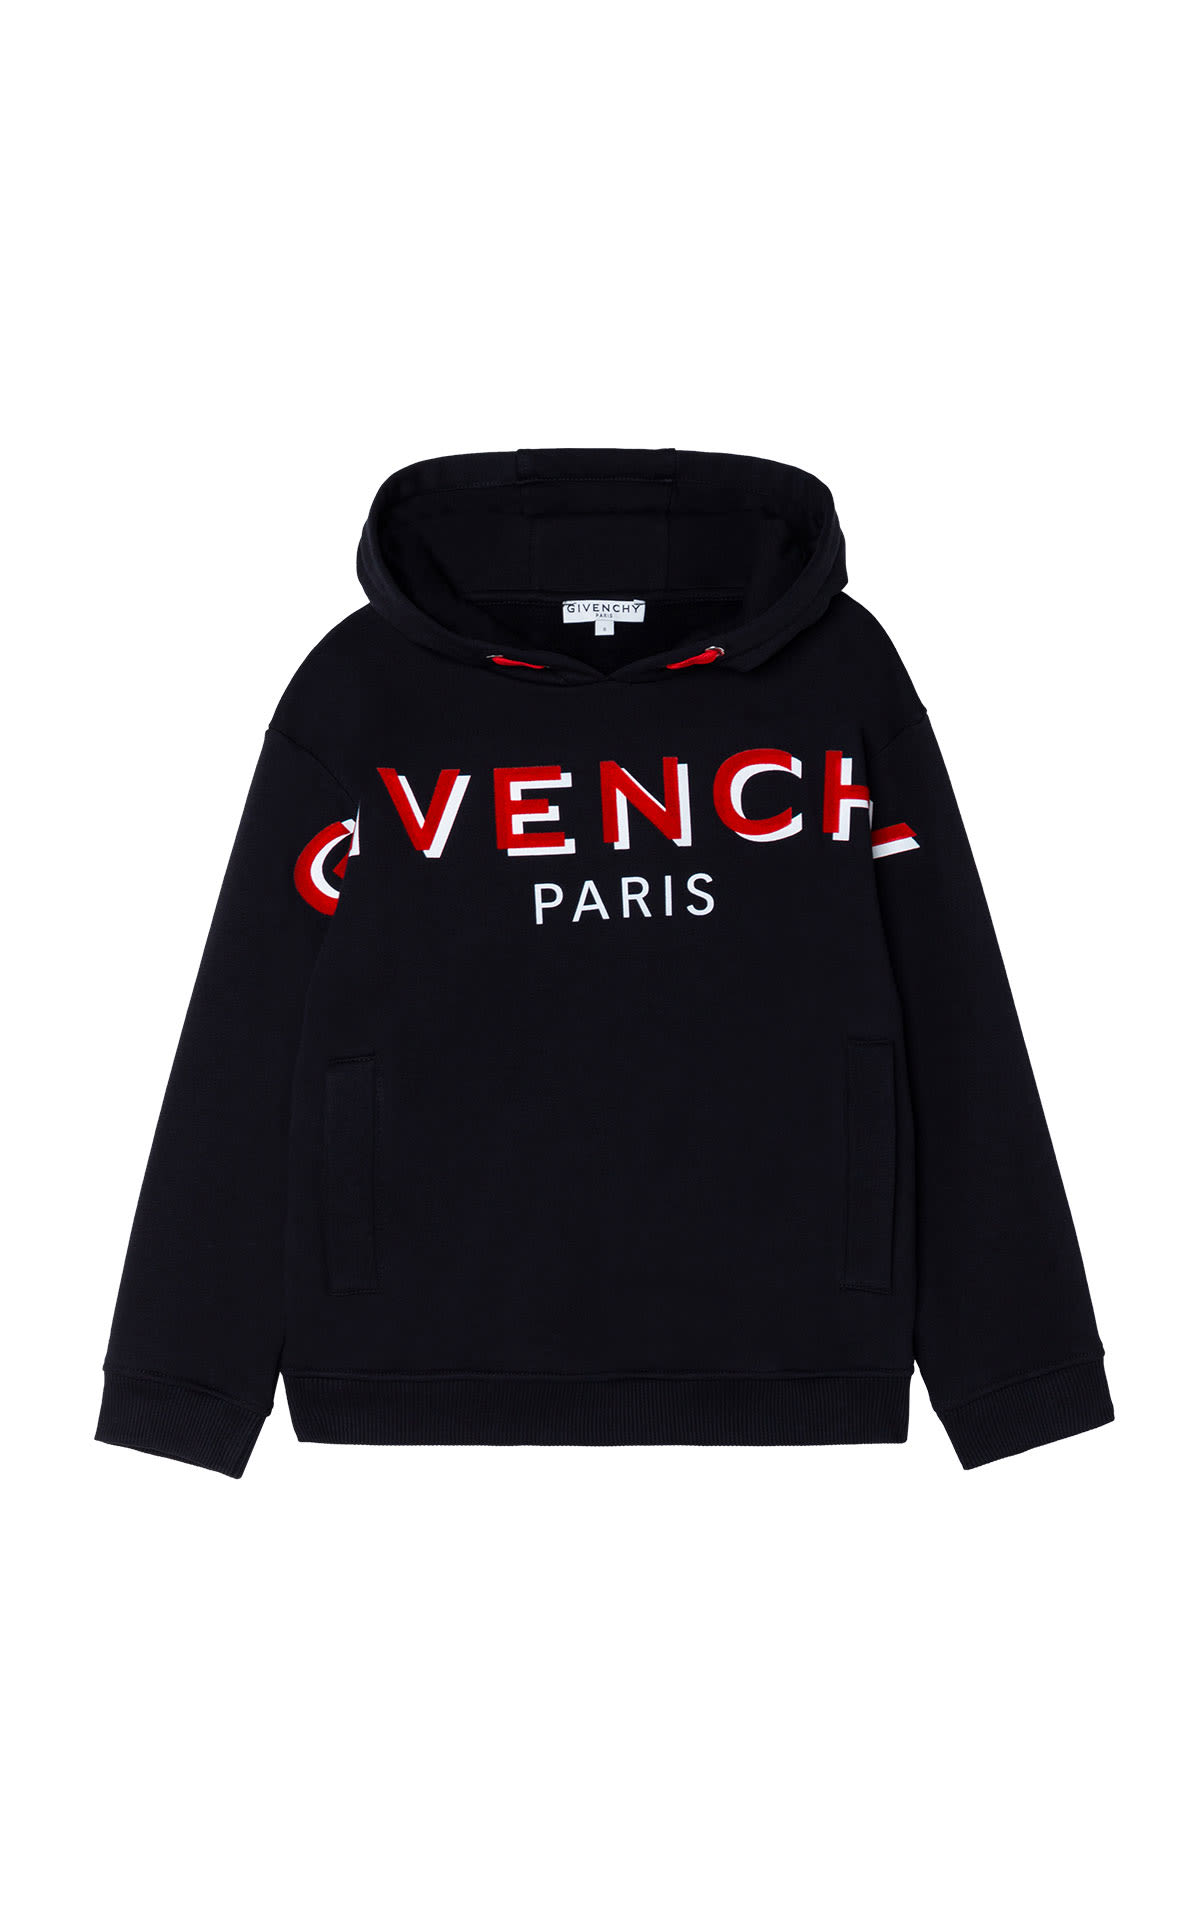 Black sweatshirt with Givenchy logo